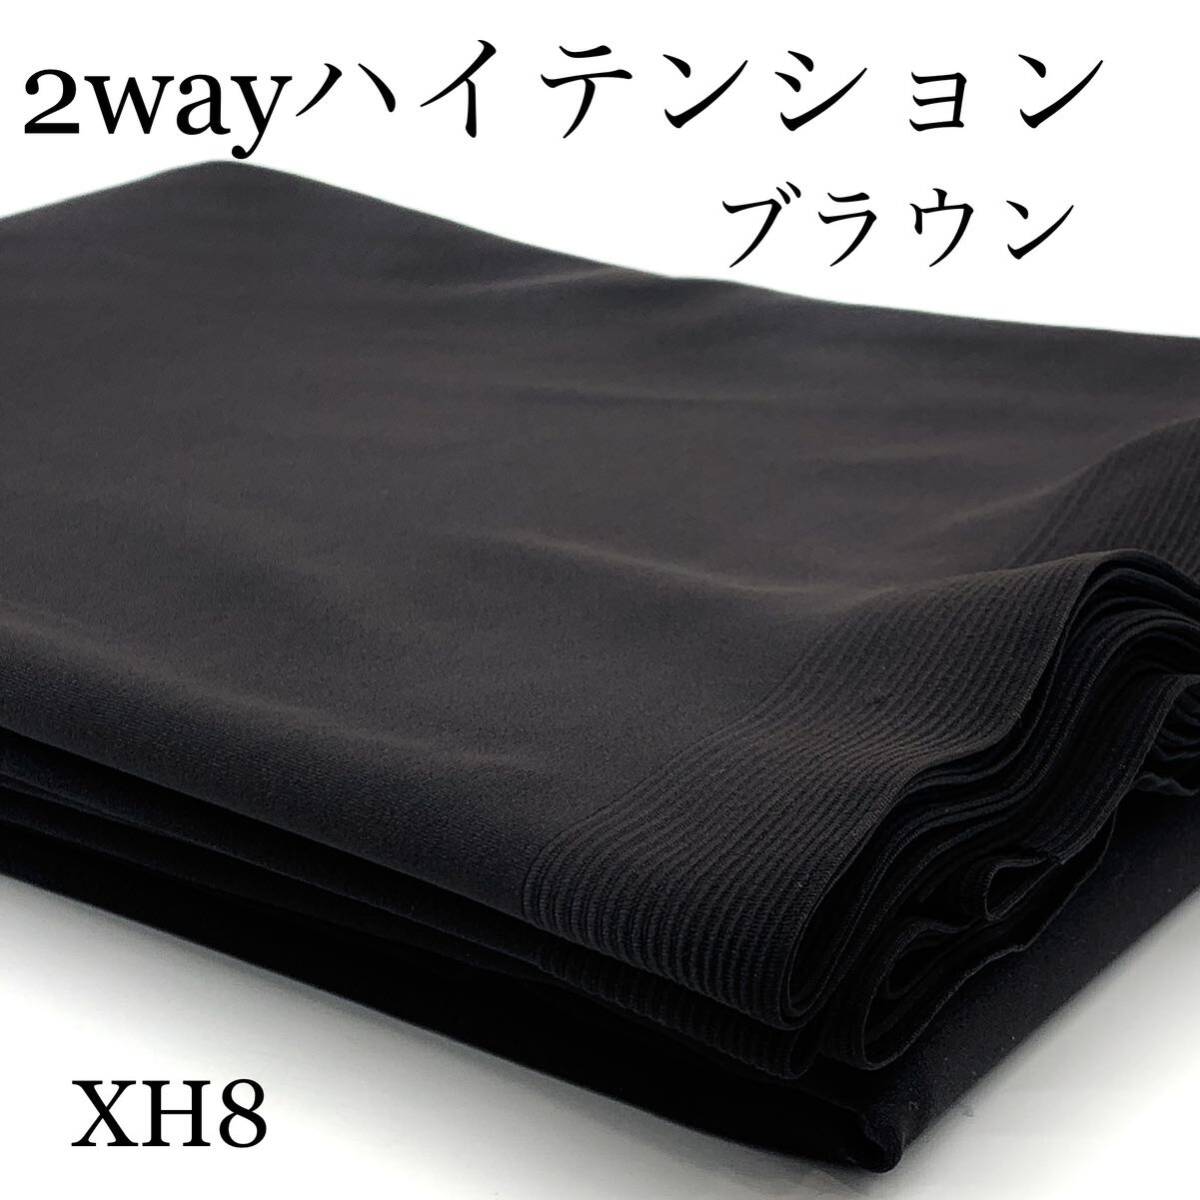 XH8 2wayハイテンション 3m ダークブラウン ストレッチ ニット 日本製 レギンス パンツ の画像1